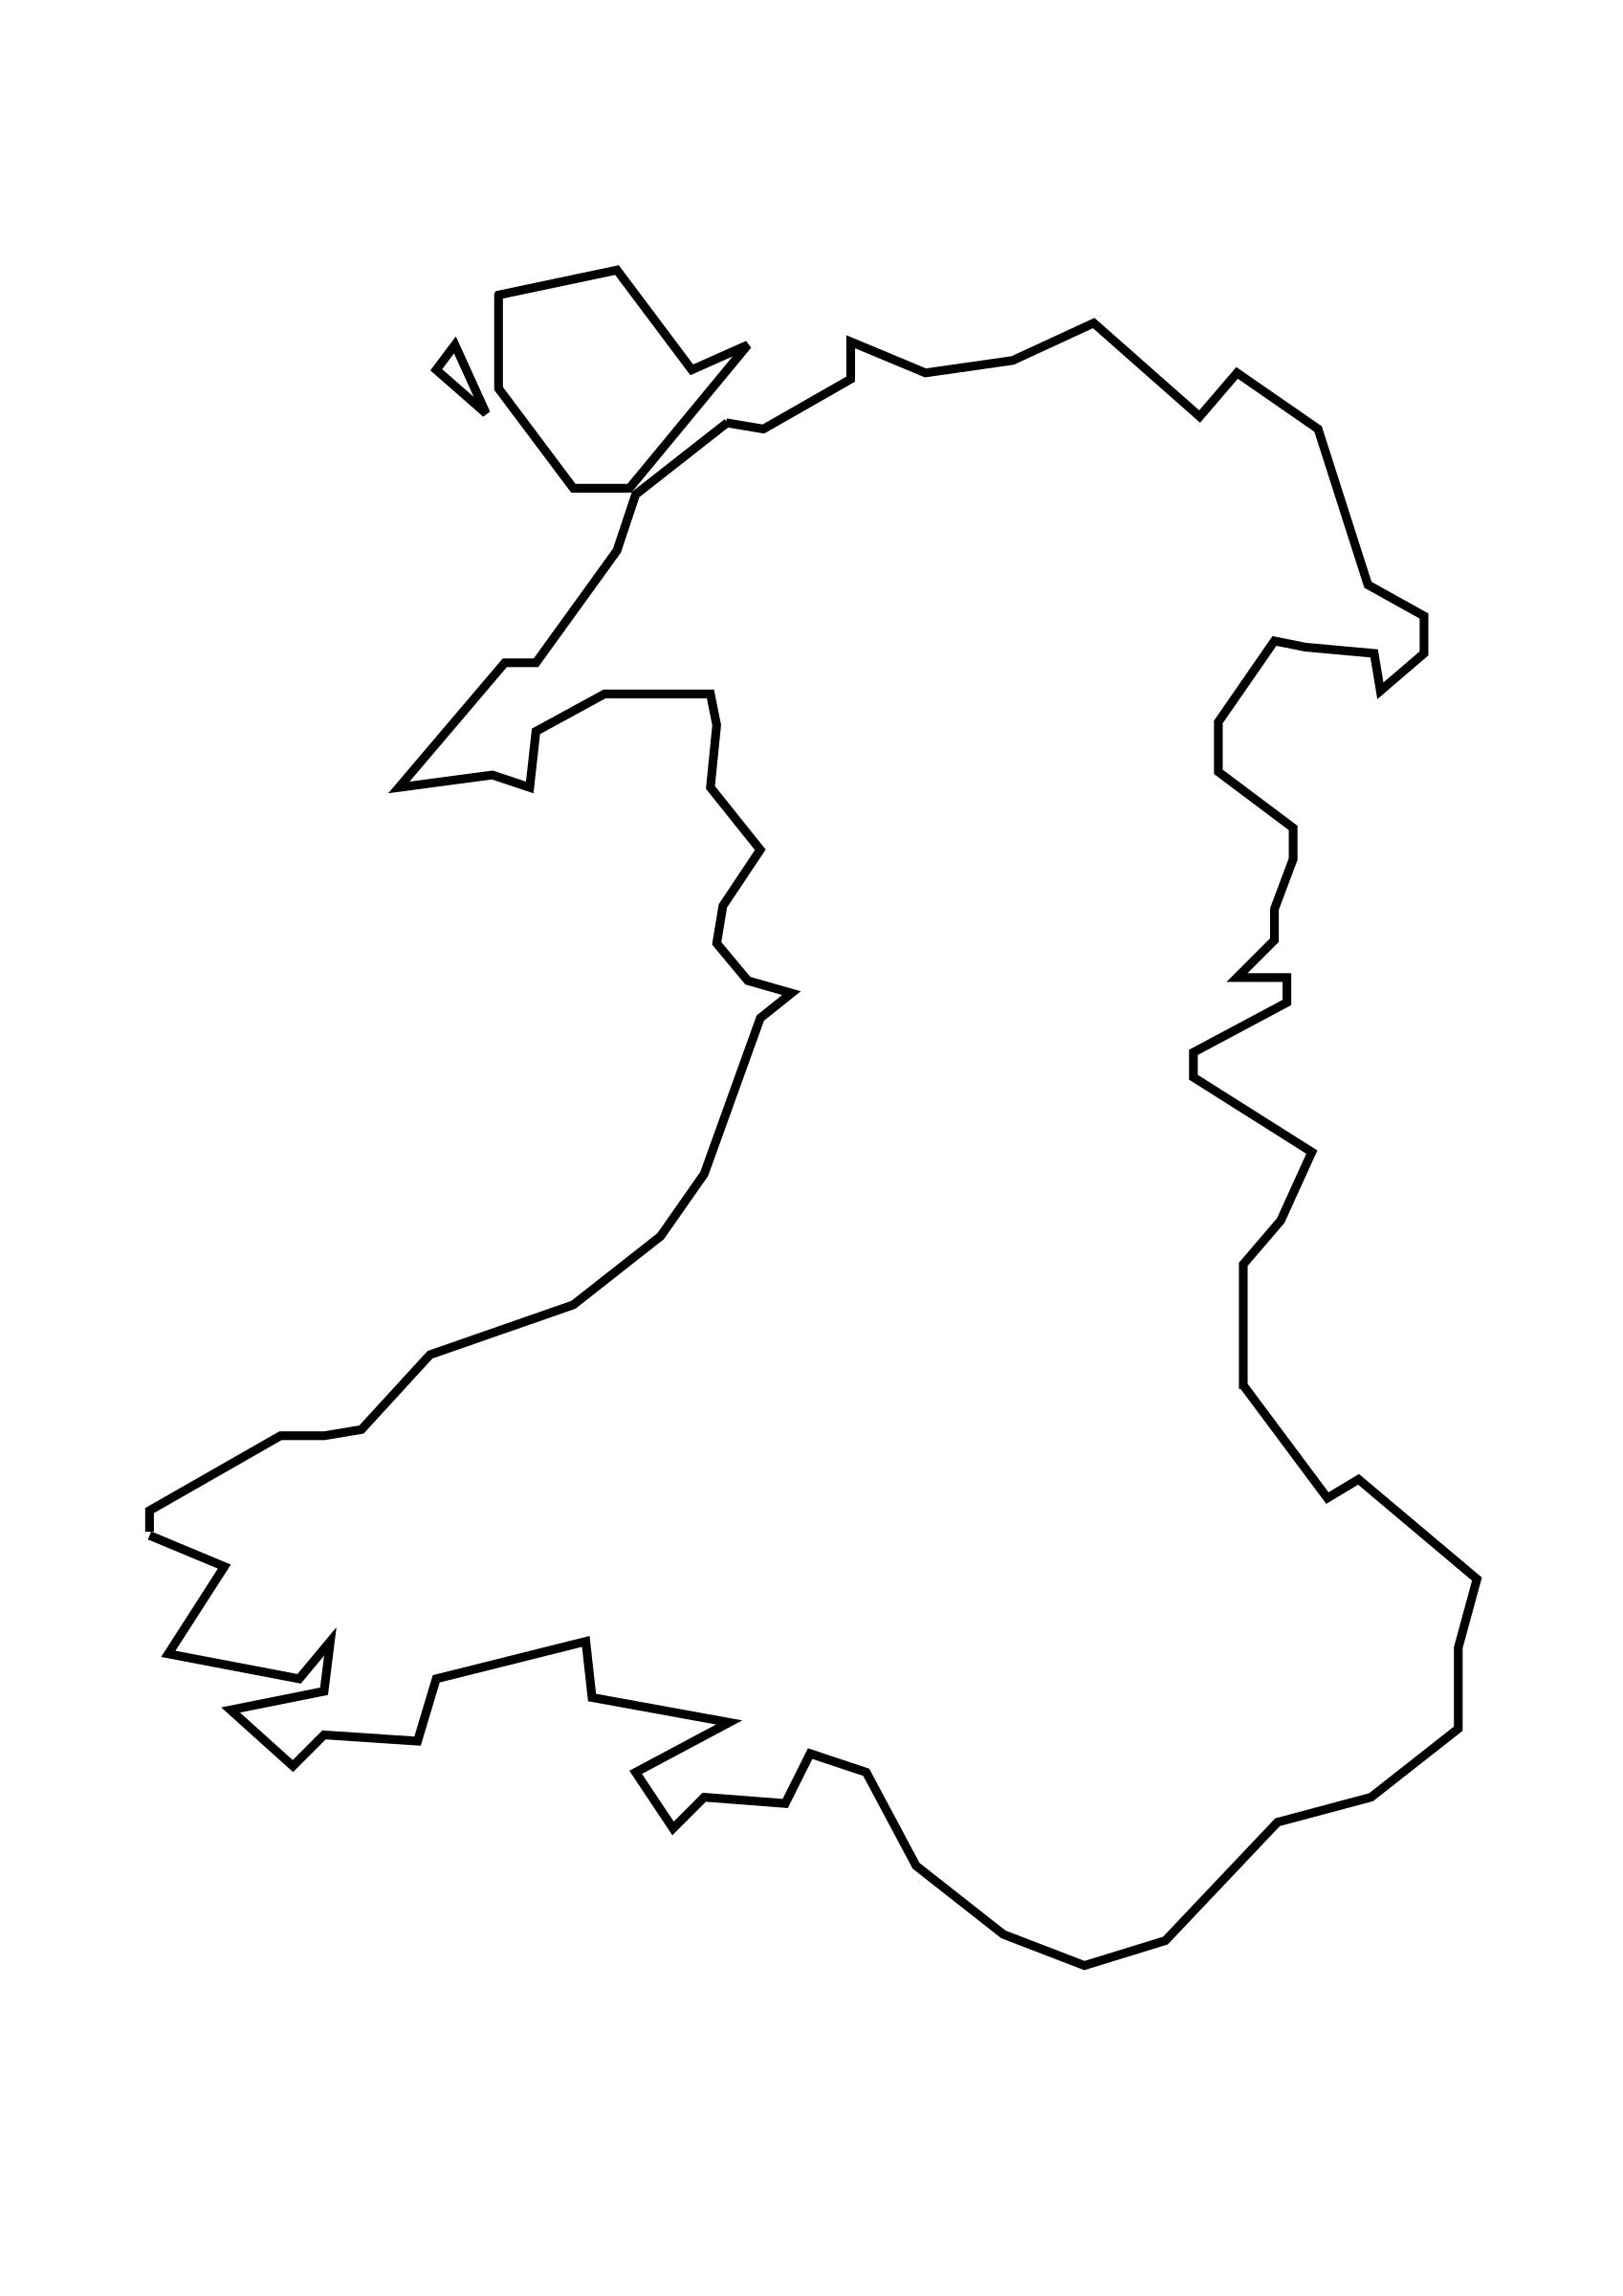 BBC Cymru Wales logo.svg.png